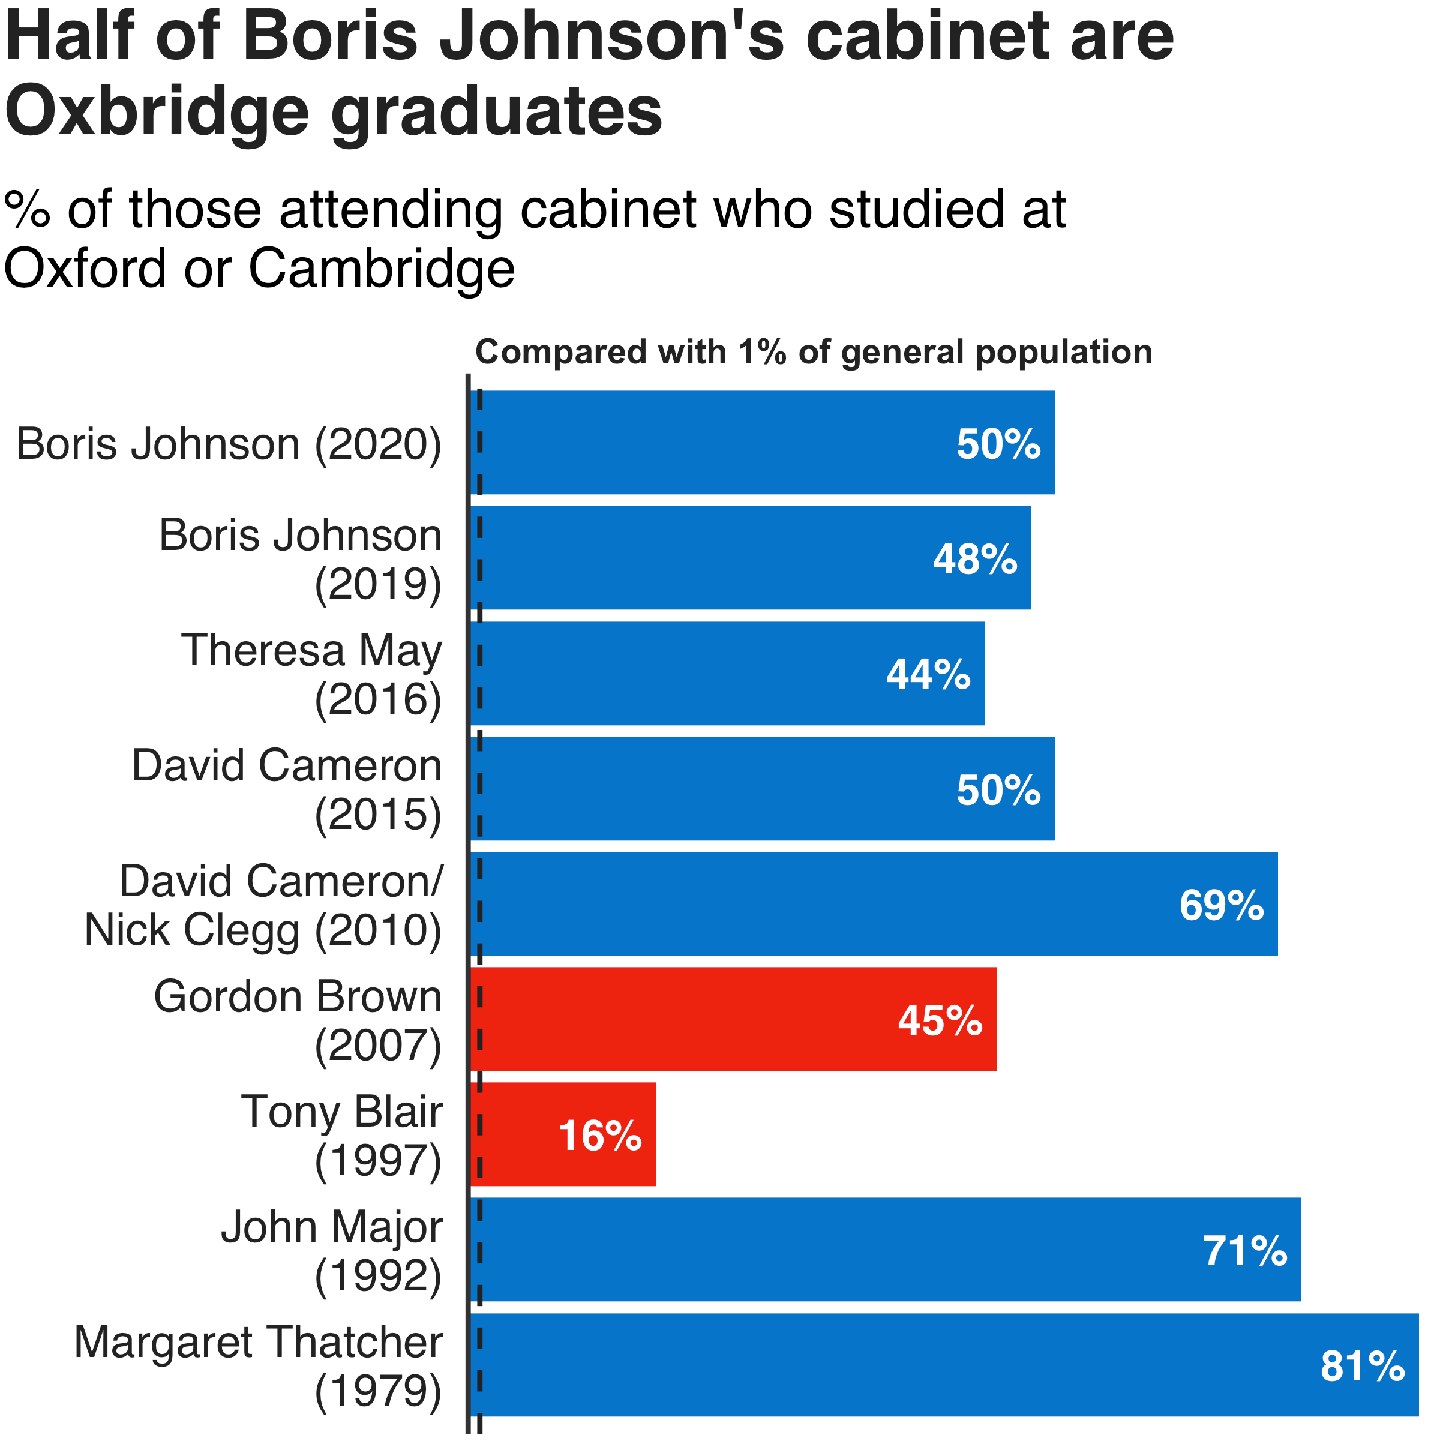 Oxbridge graduates make up 50% of Bojo's cabinet